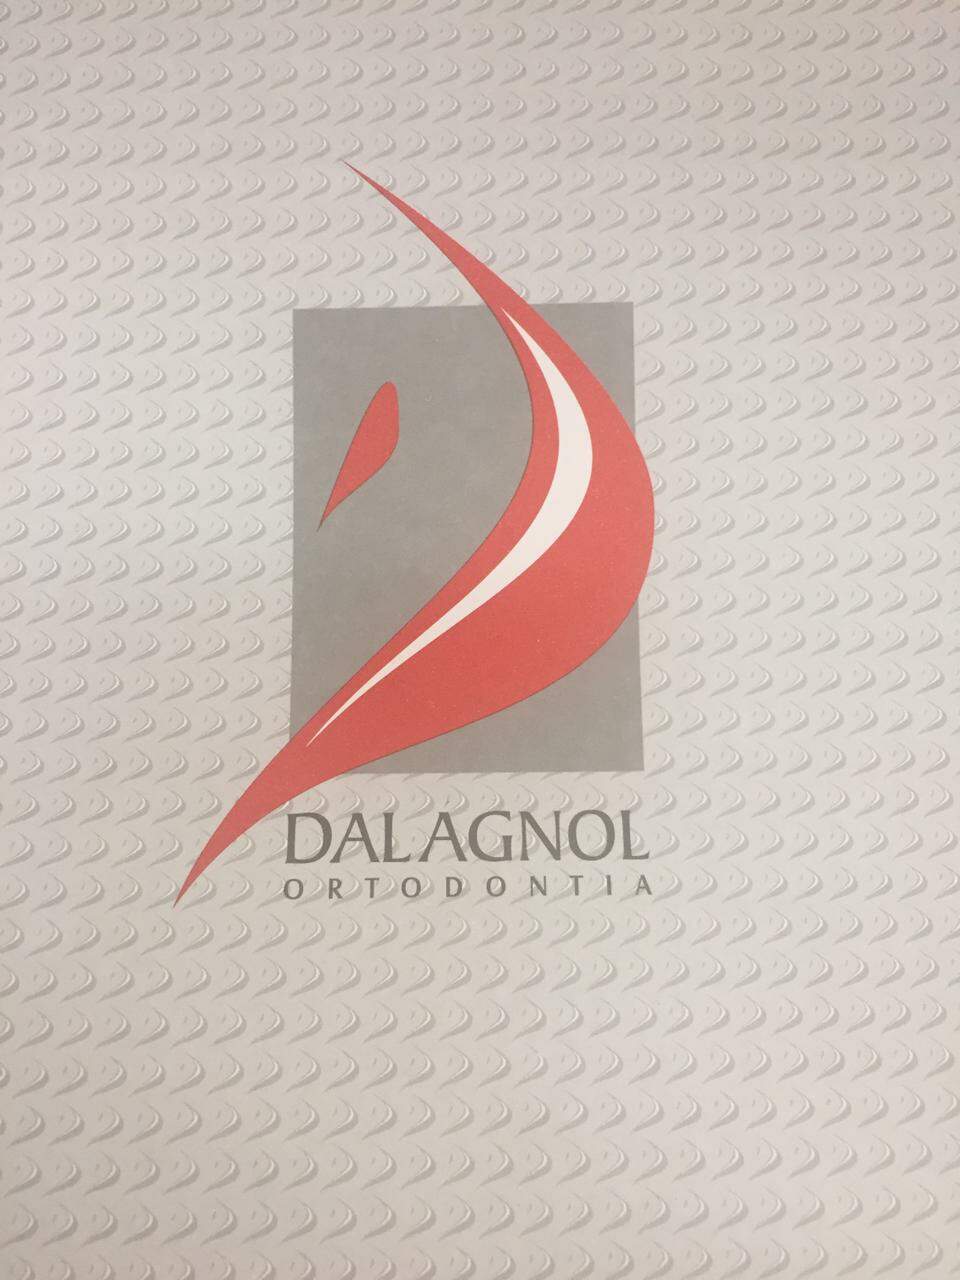 Dalagnol Ortodontia Logomarca